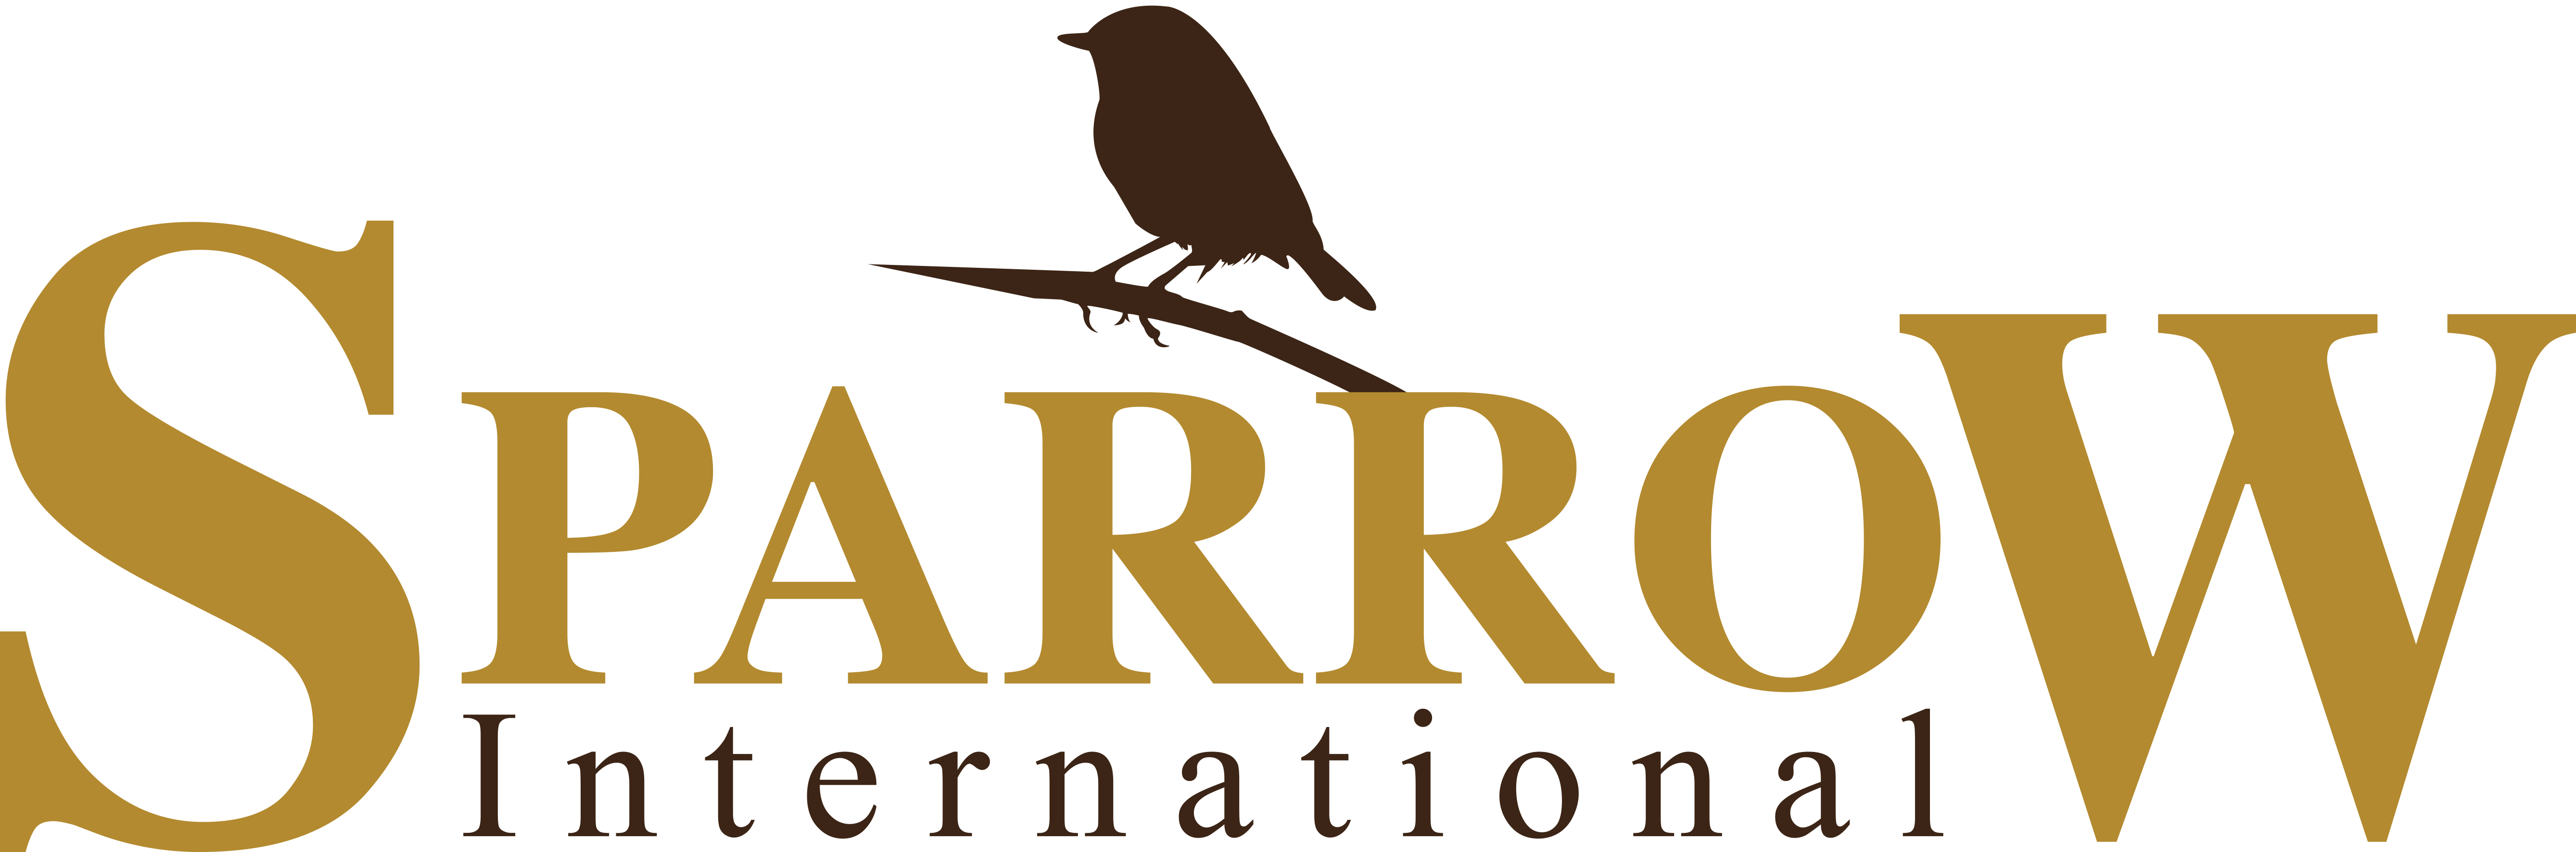 Sparrow international contact us banner -best coffee supplier in Dubai